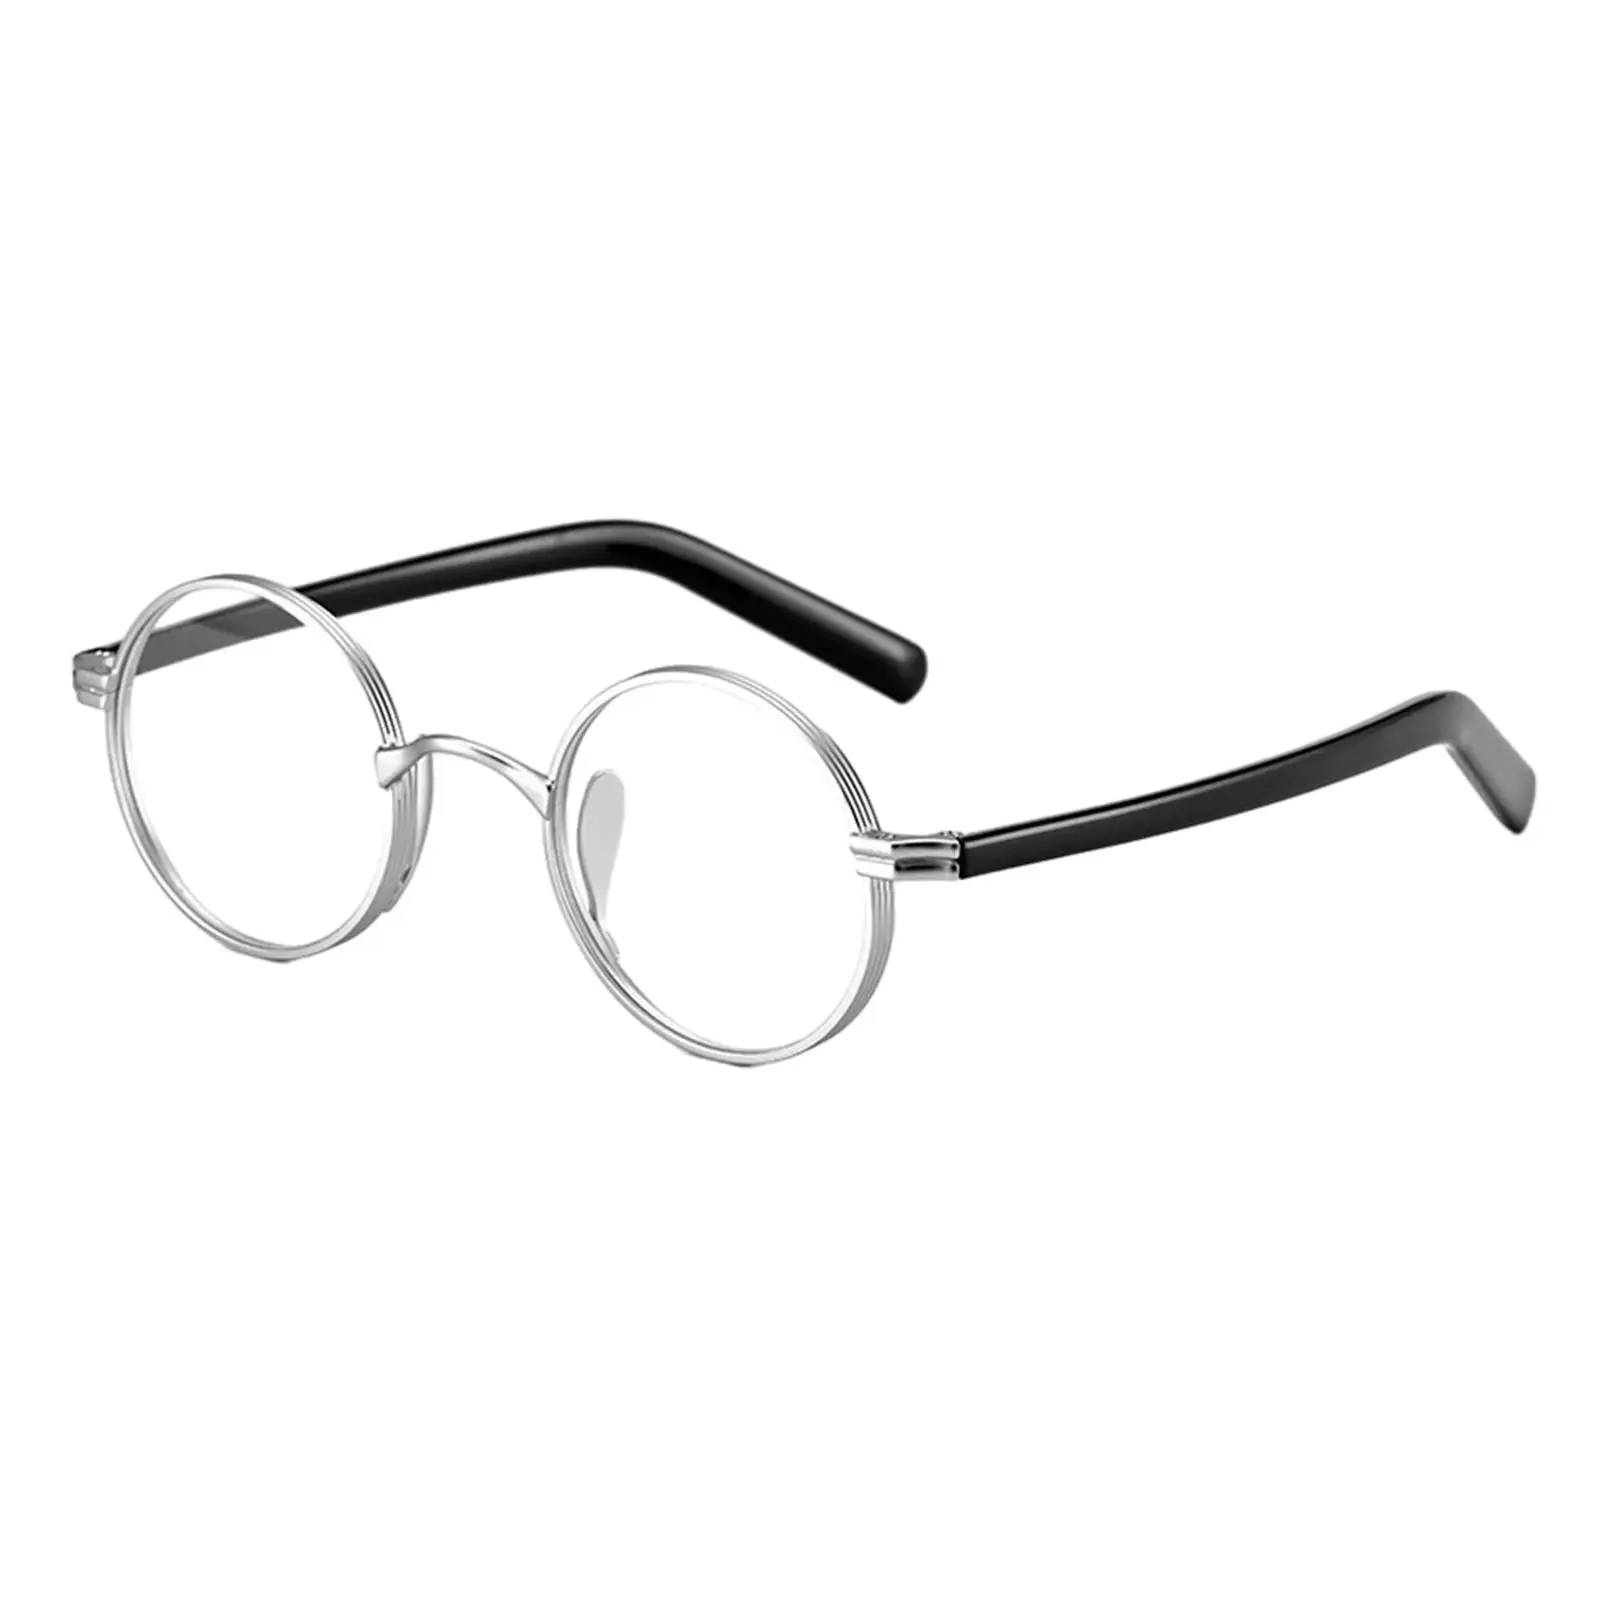 Glasses Frames Titanium Alloy Eyeglass Frame Comfortable to Wear Oval Oversized Eyewear Frames Round Eyeglasses Frames